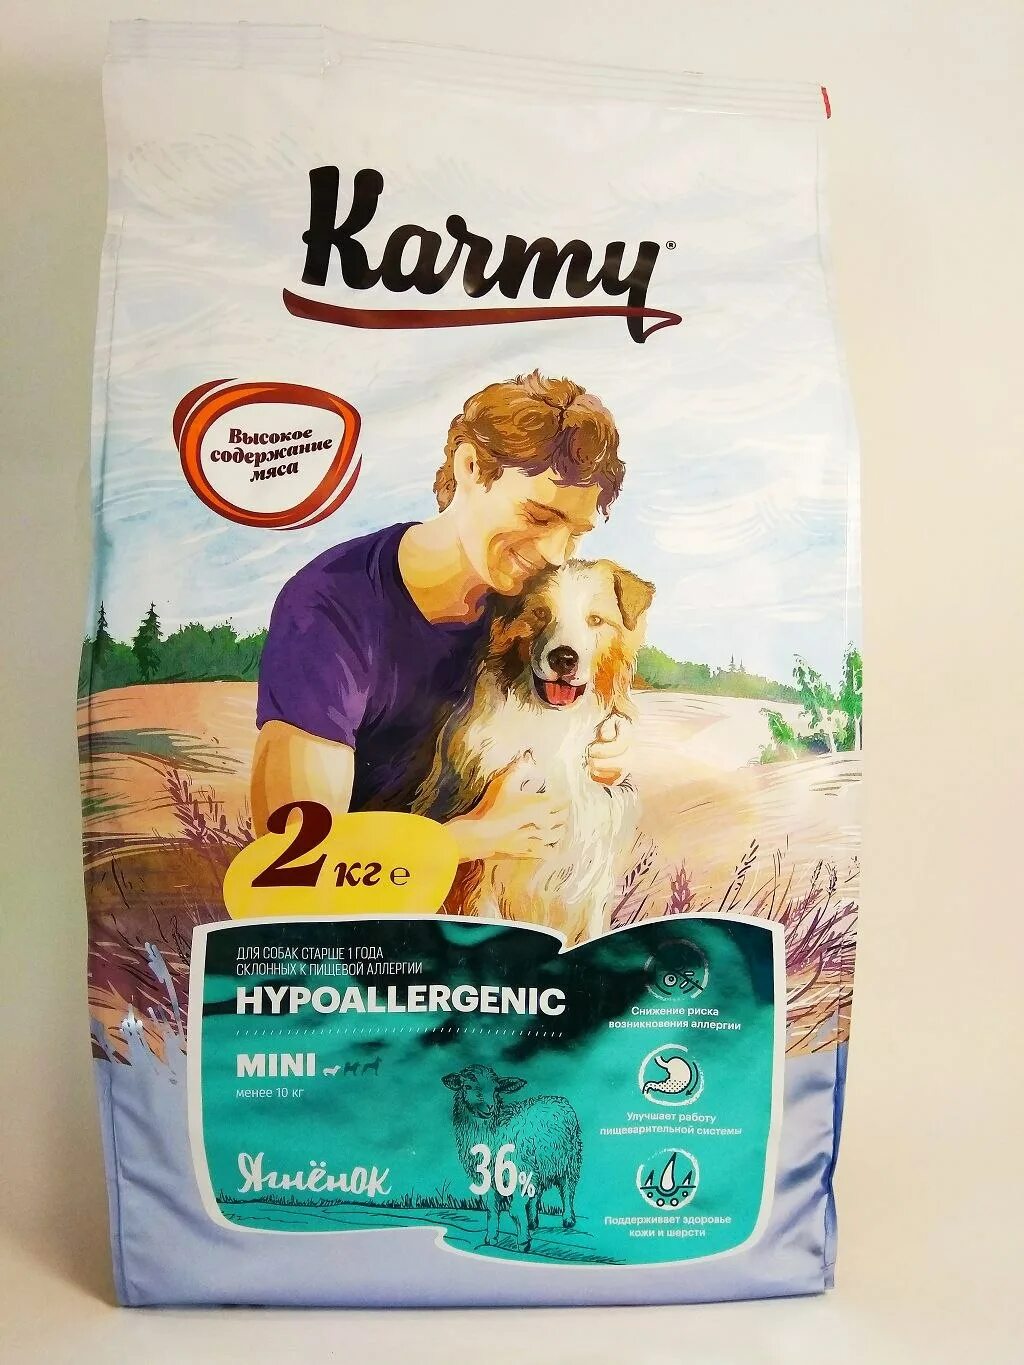 Карм кг. Karmy 2 кг гипоаллергенный для собак мини. Сухой корм karmy Hypoallergenic Medium & Maxi. Сухой корм для собак karmy гипоаллергенный ягненок. Карми гипоаллергенный корм для собак с ягненком.